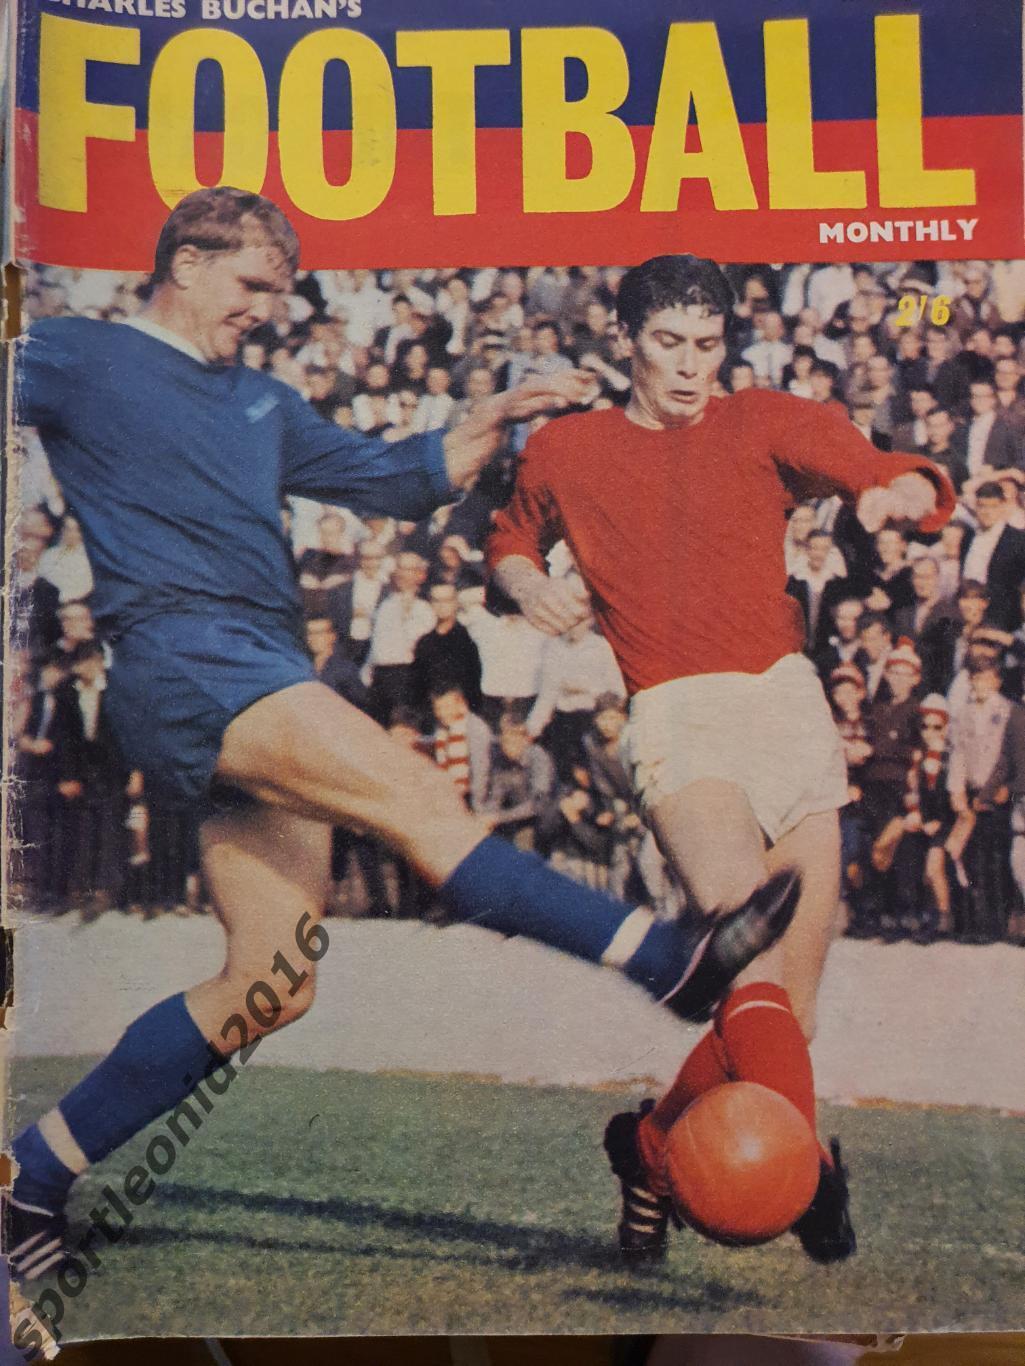 Football Monthly Charles Buchans's 1967 8 выпусков.3